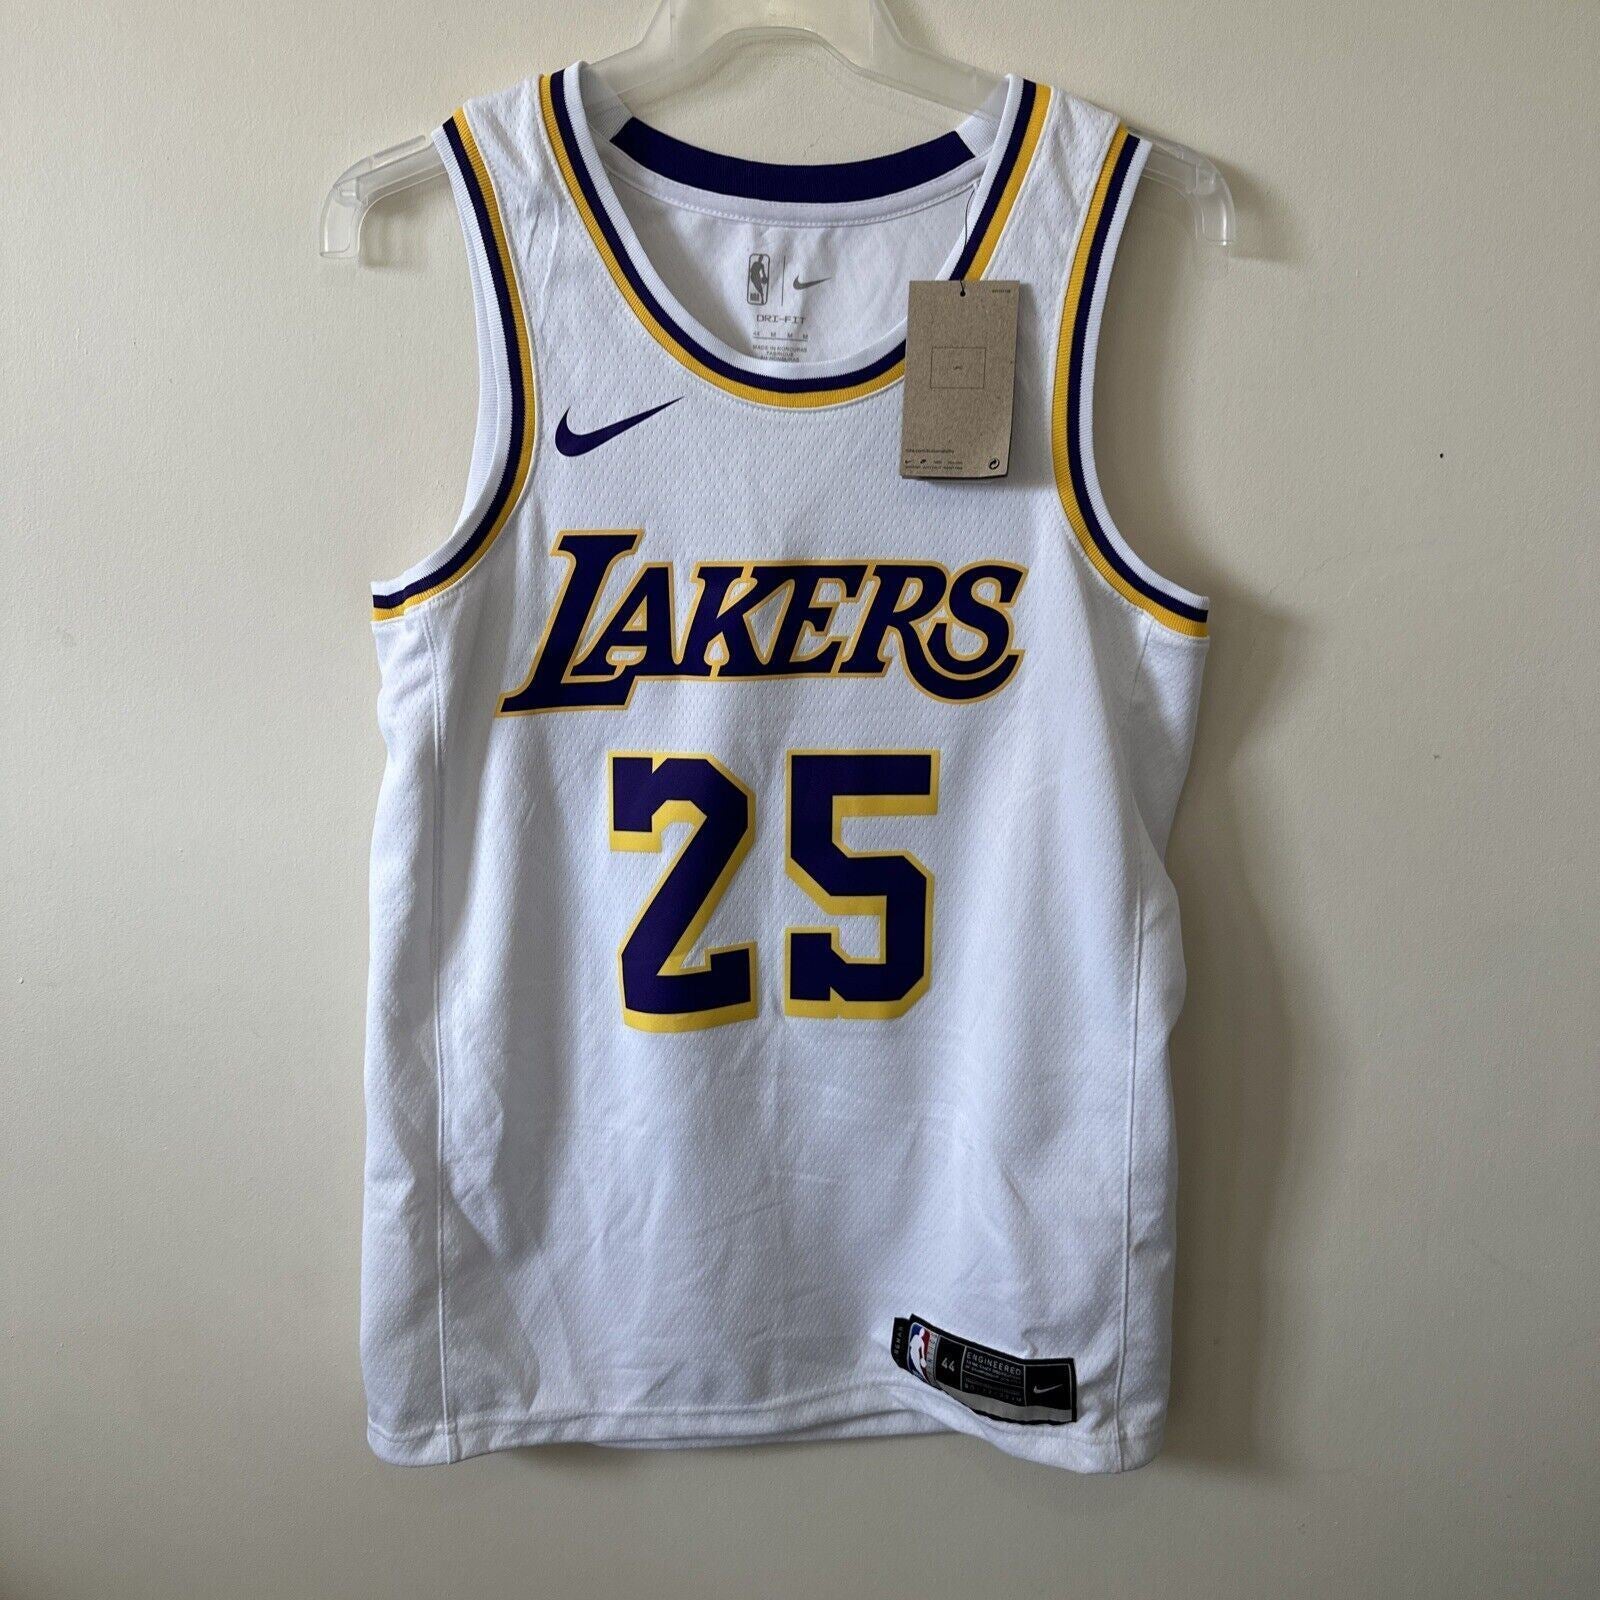 Nike NBA LA Lakers Swingman Edition Jersey #25 Basketball Men’s Medium